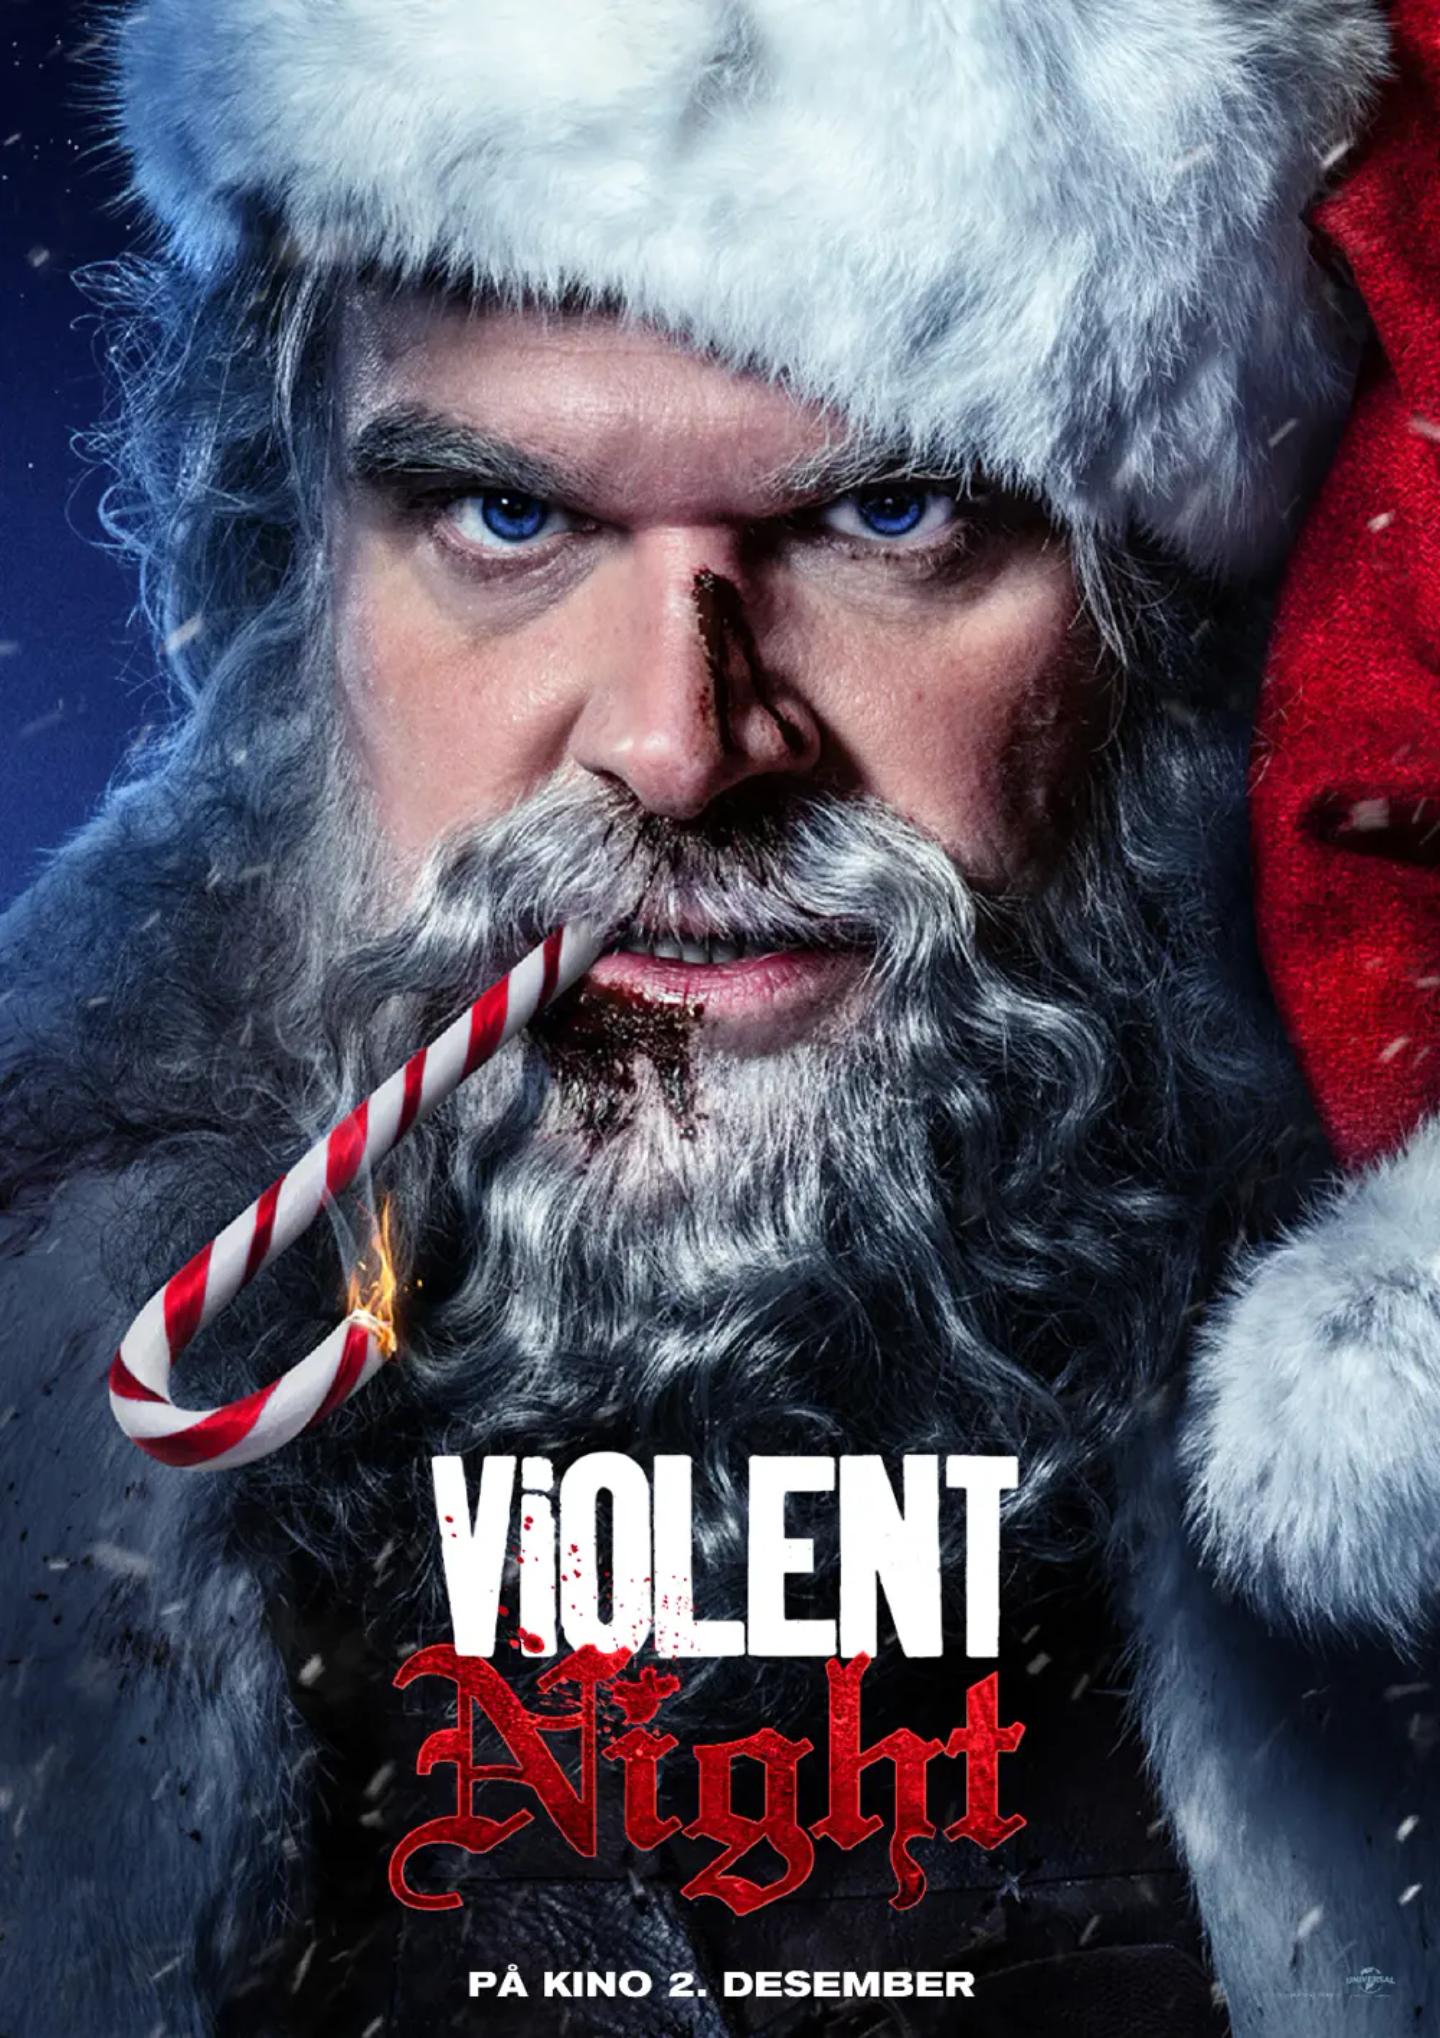 Plakat for 'Violent Night'